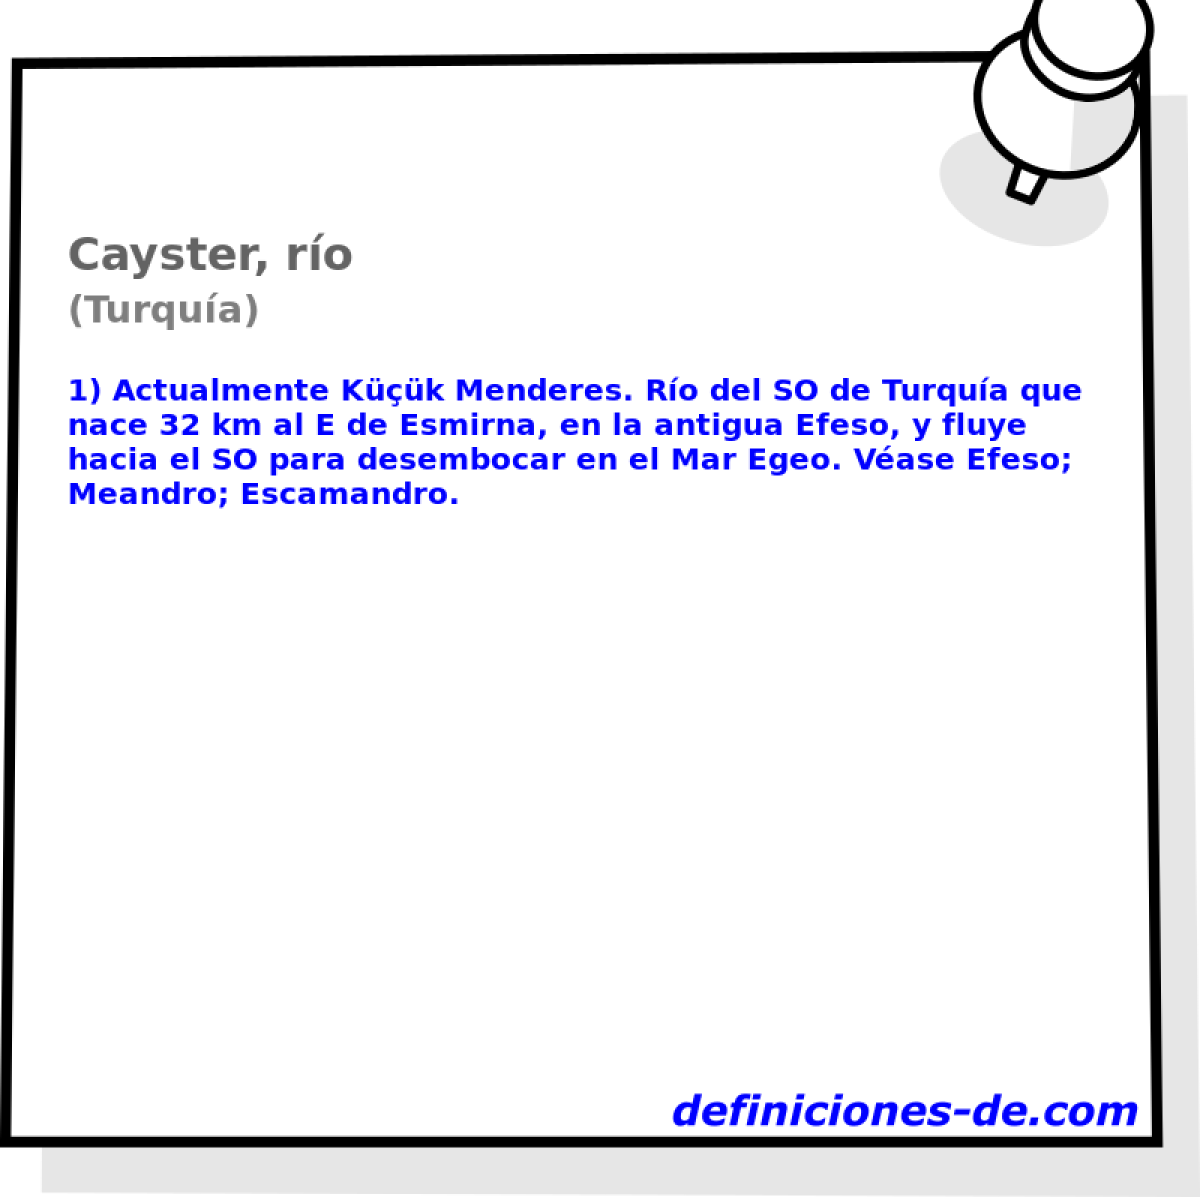 Cayster, ro (Turqua)